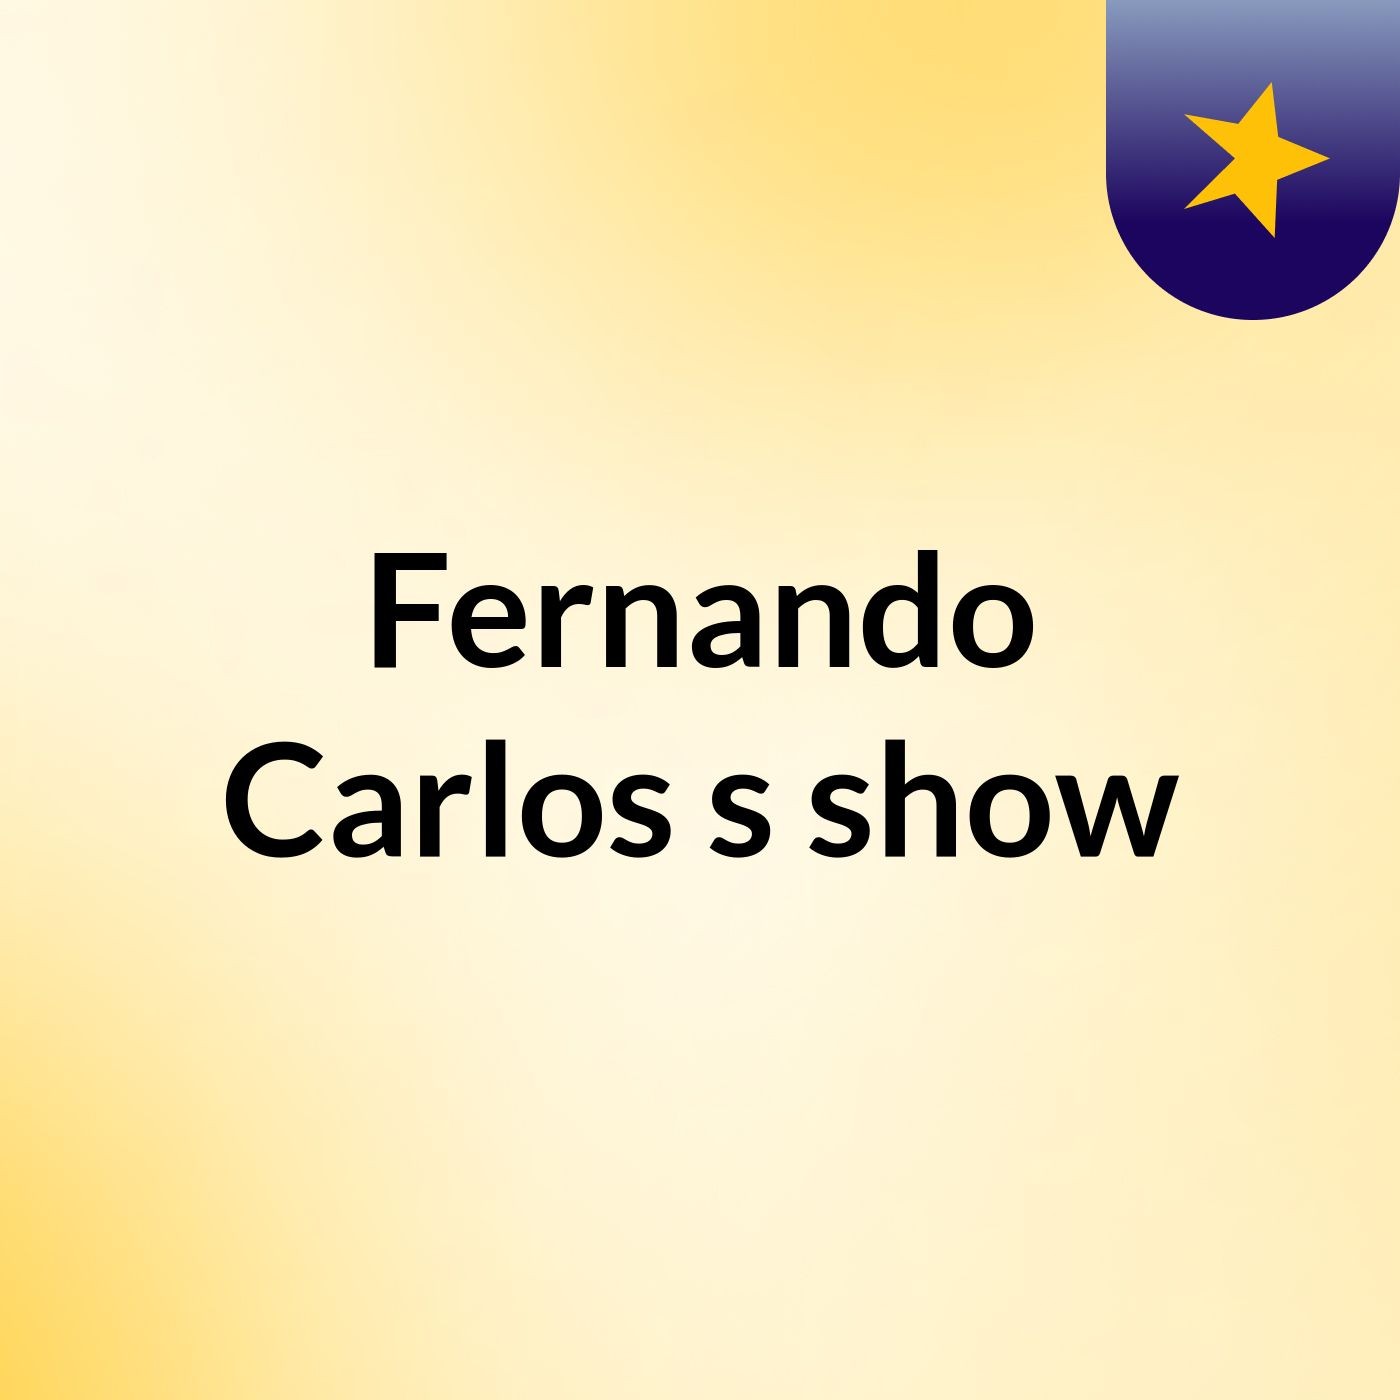 Fernando Carlos's show